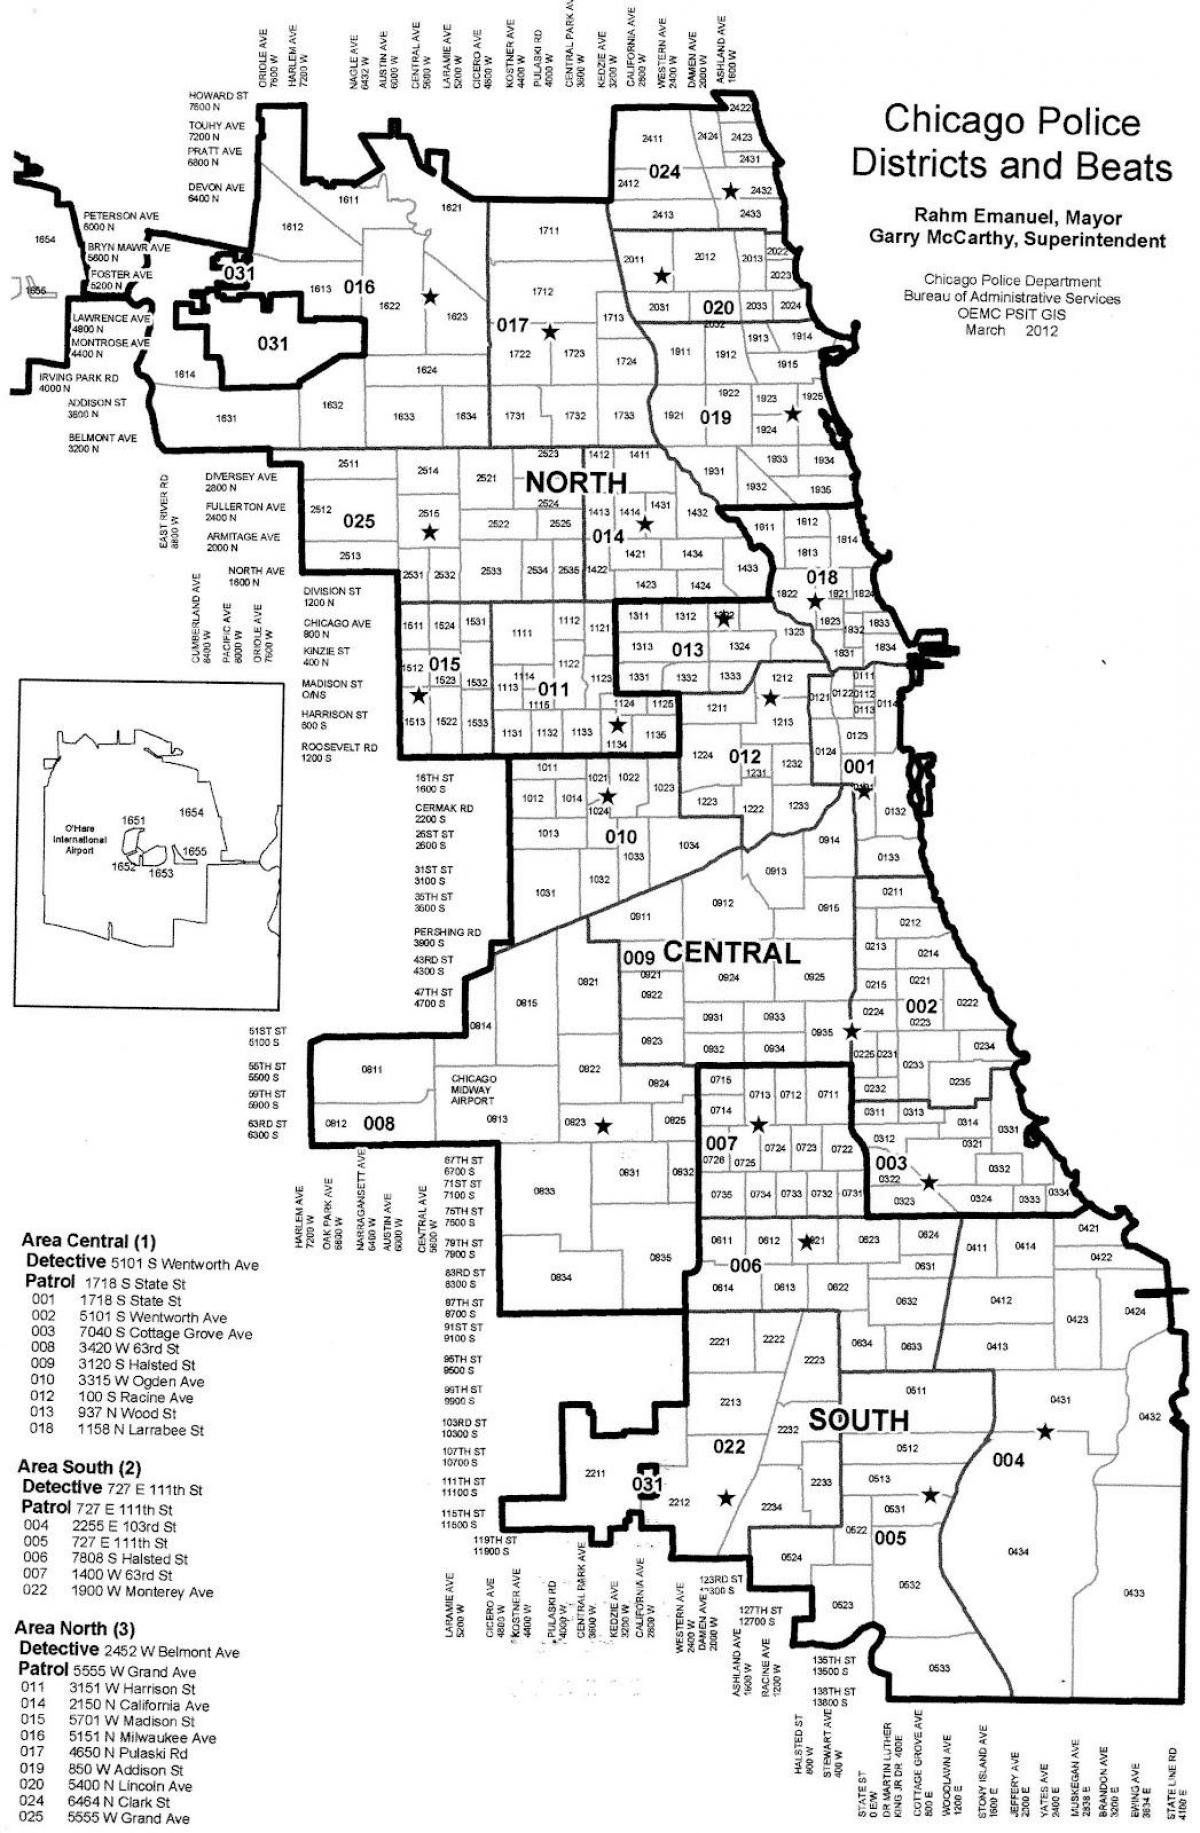 les districts de police de la carte de Chicago